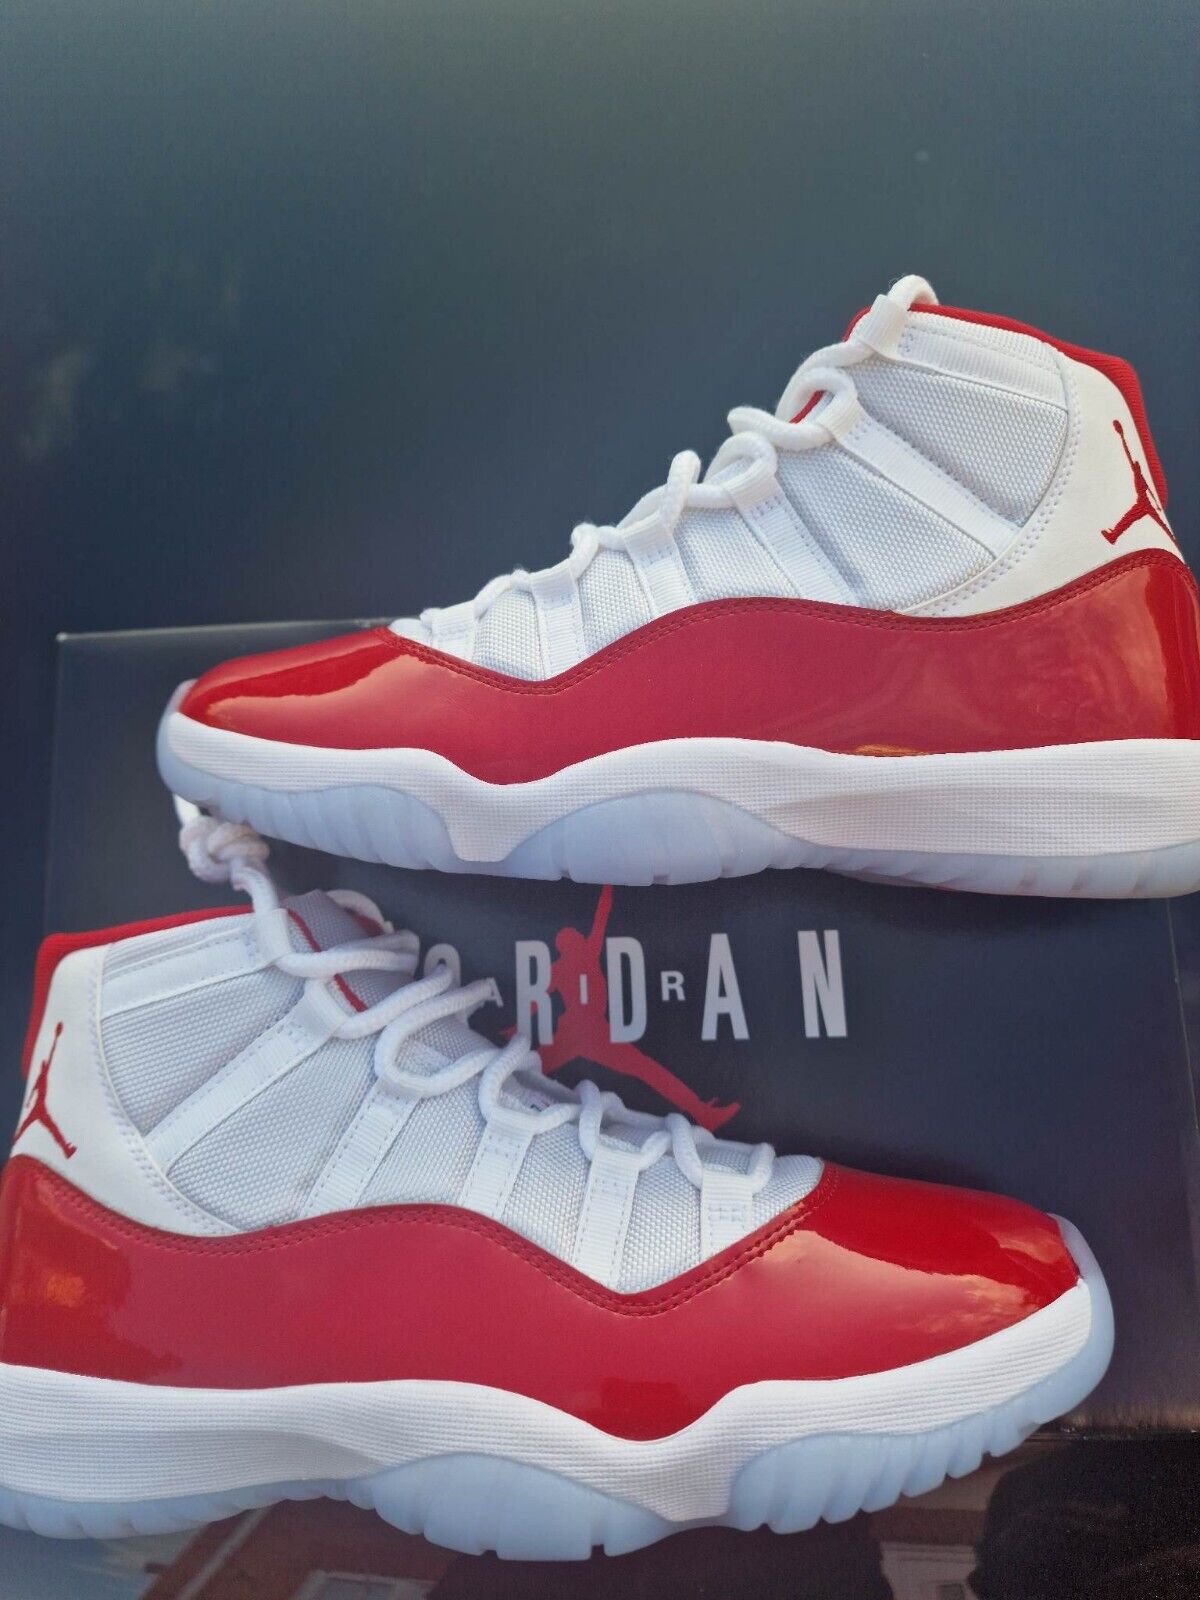 Jordan 11 Retro High Cherry